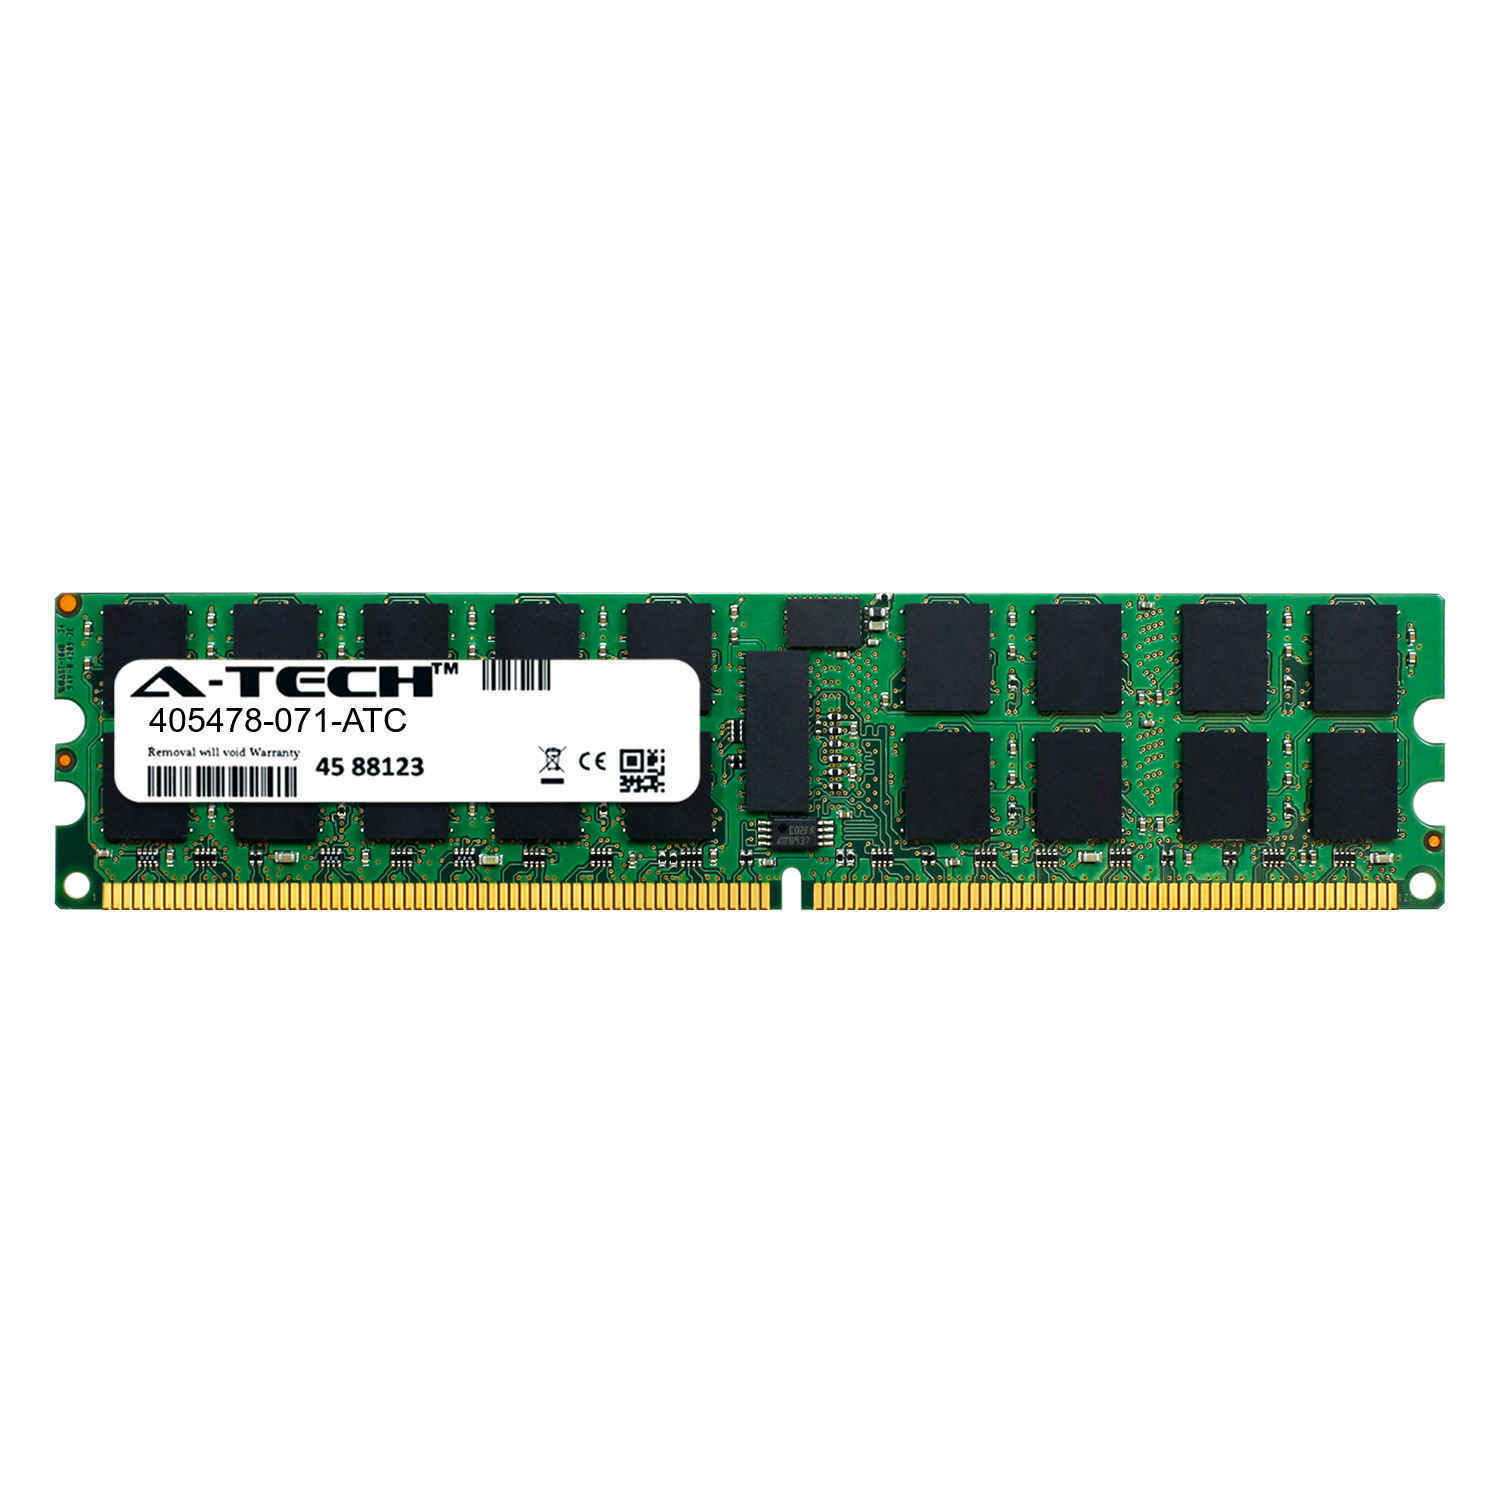 8GB DDR2 PC2-5300R 667MHz RDIMM (HP 405478-071 Equivalent) Server Memory RAM